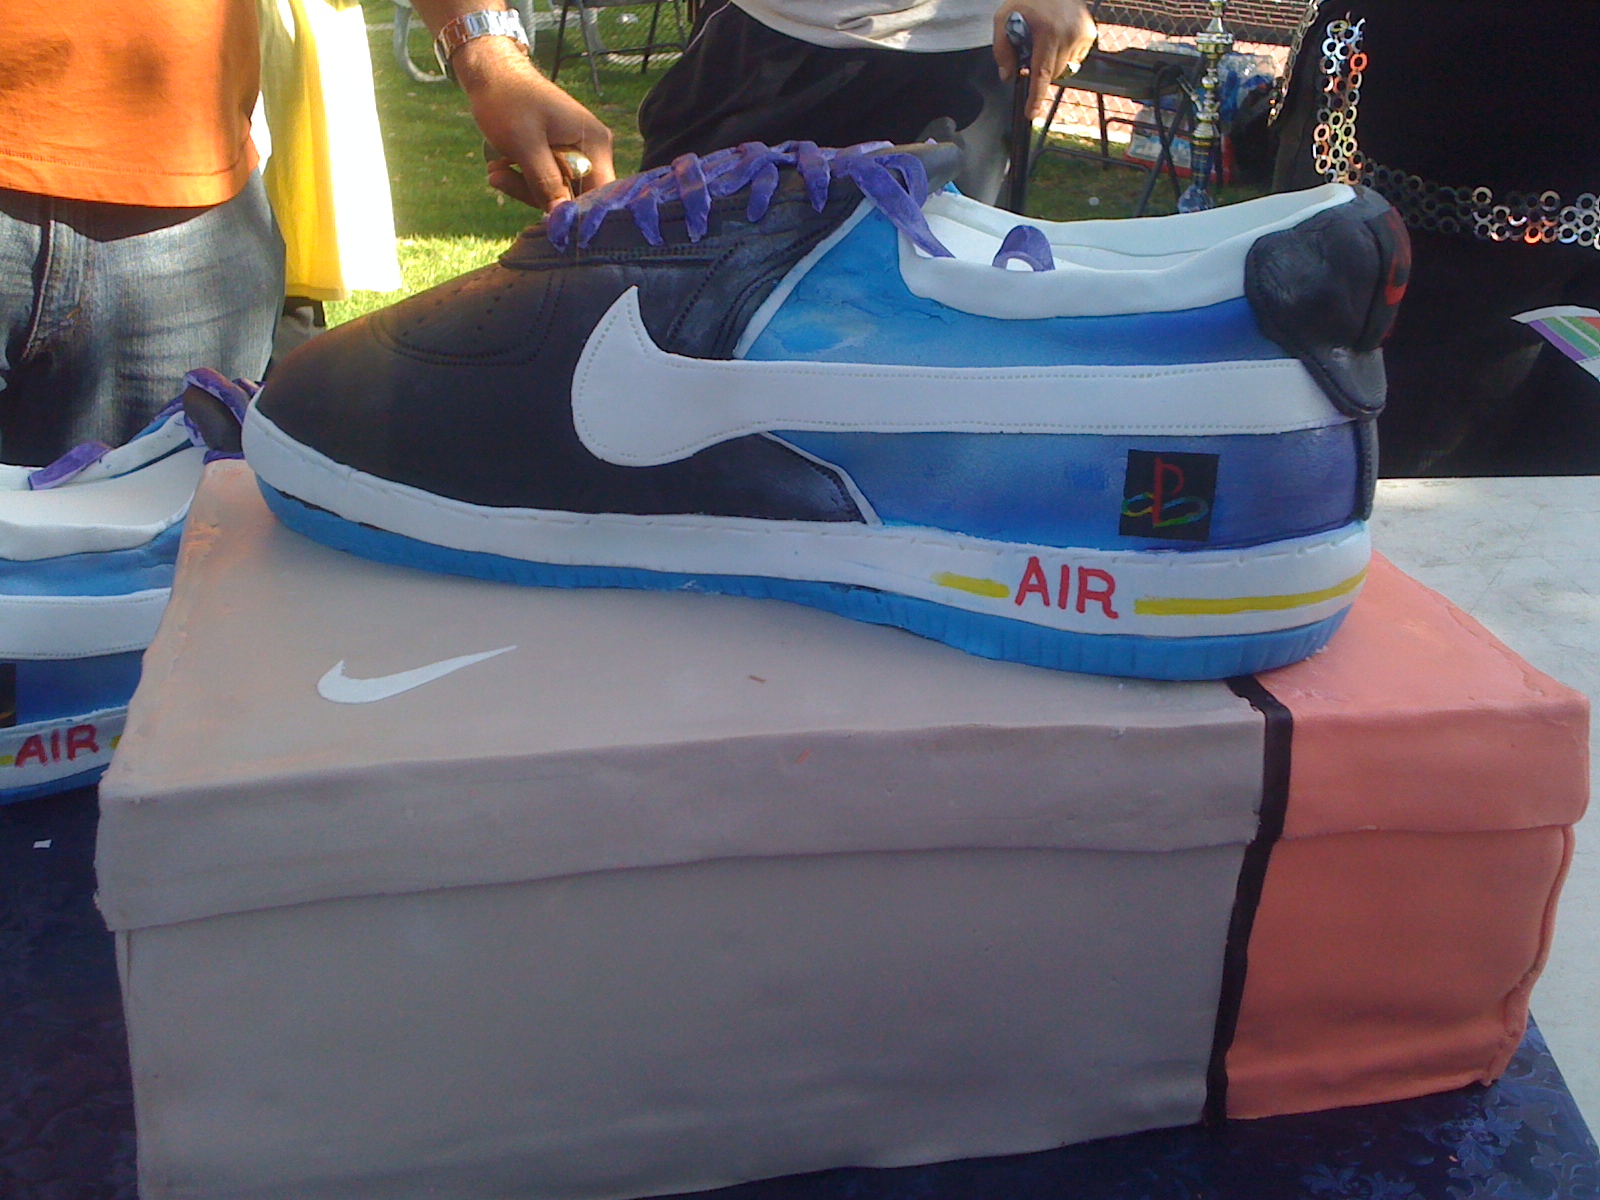 Air Force 1 Nike shoe and box cake